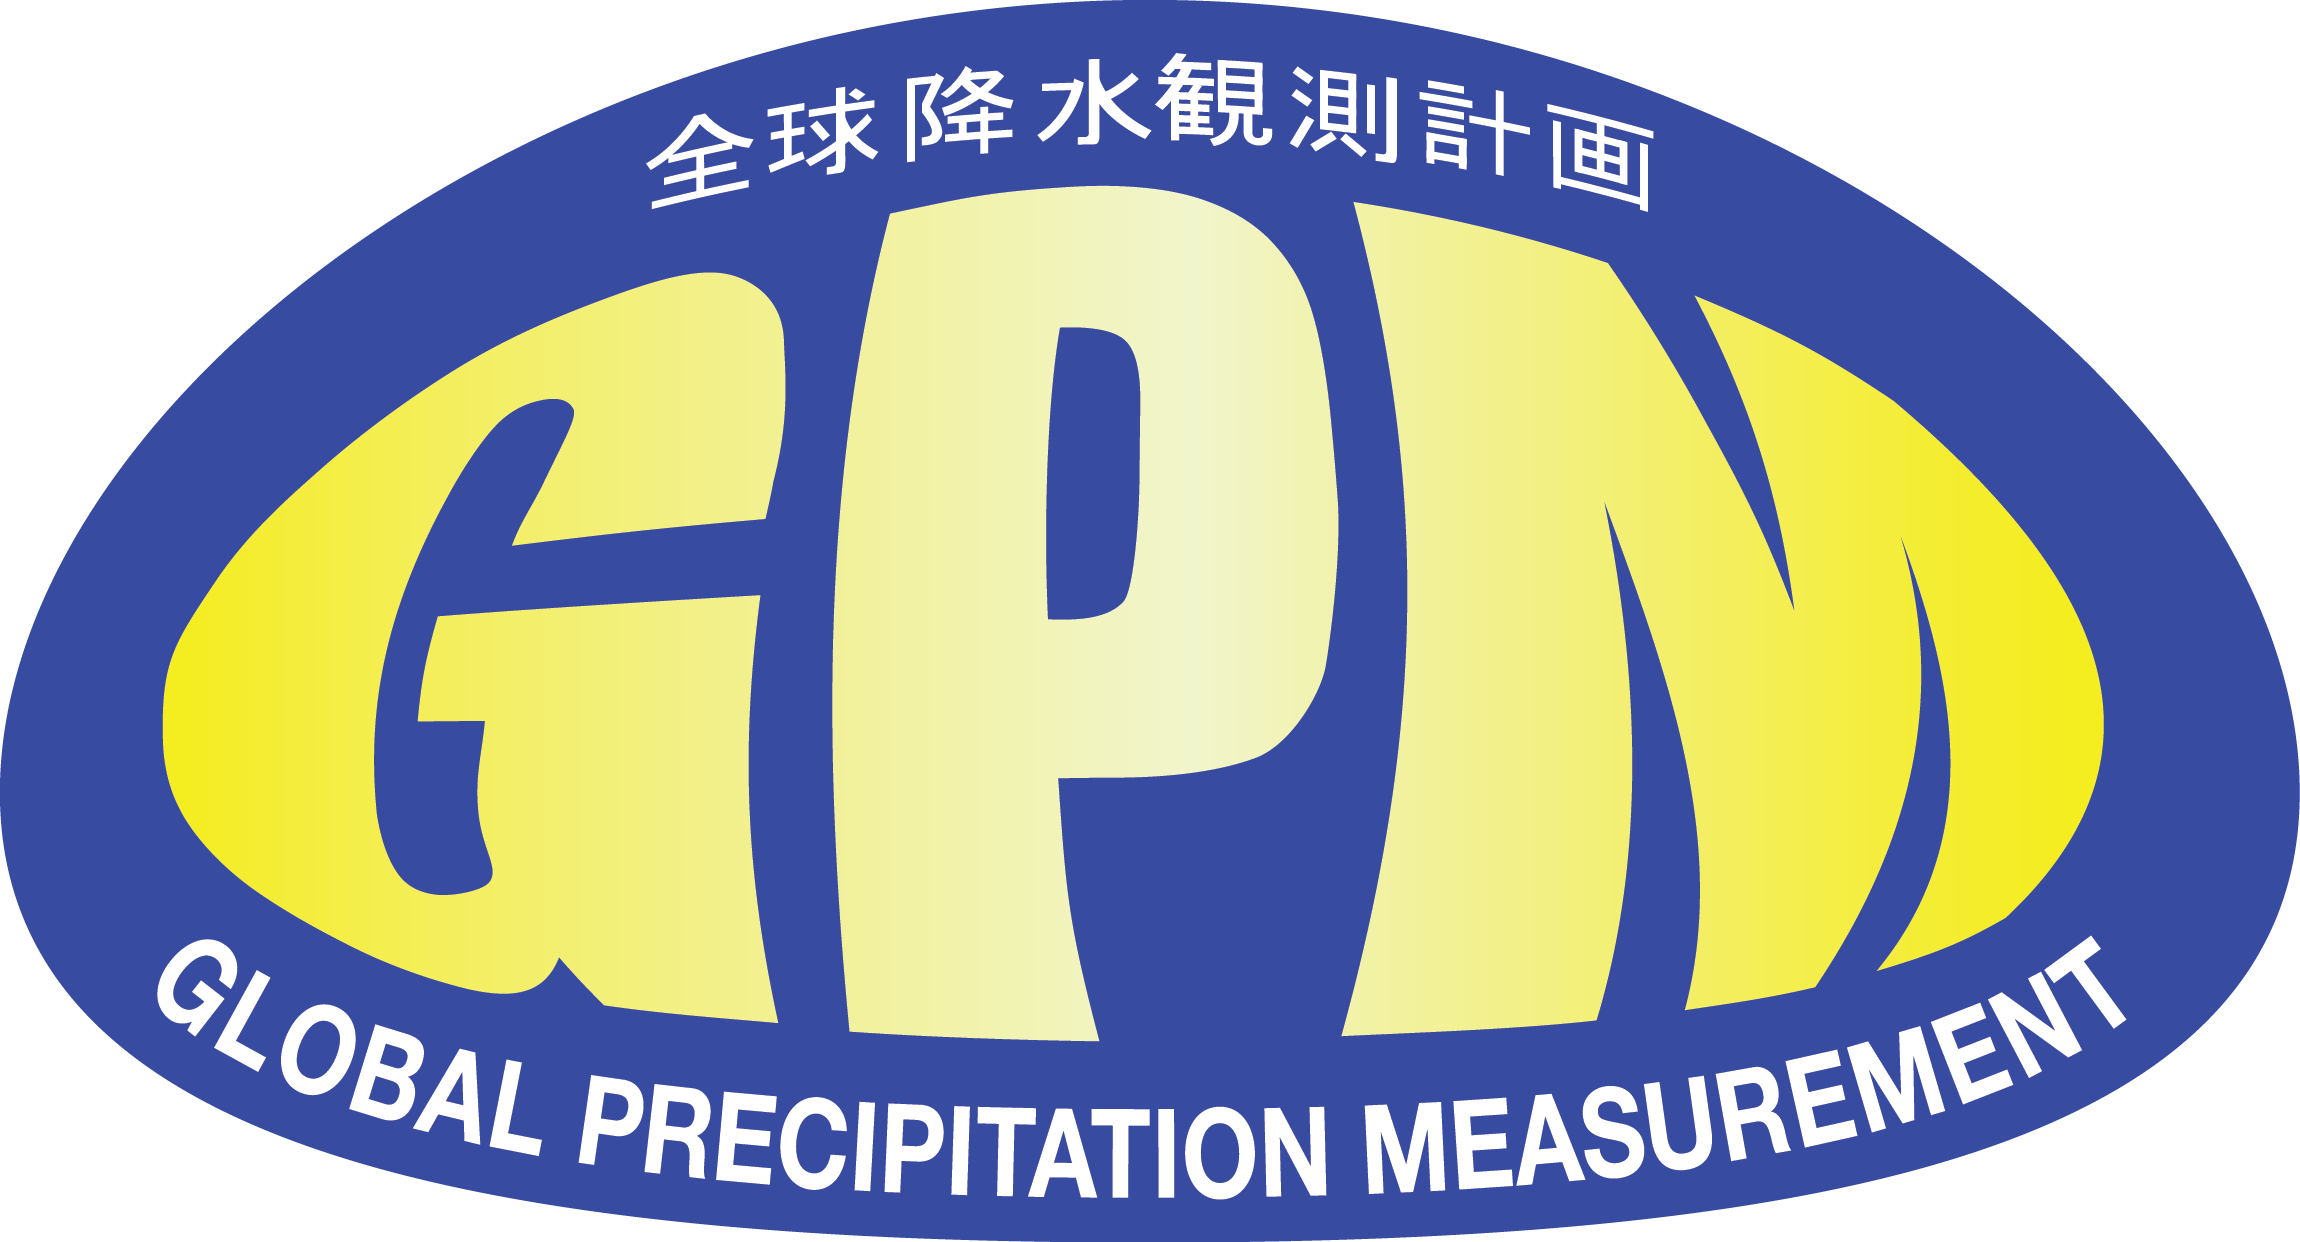 Gpm_Logo.png - Jaxa, Transparent background PNG HD thumbnail